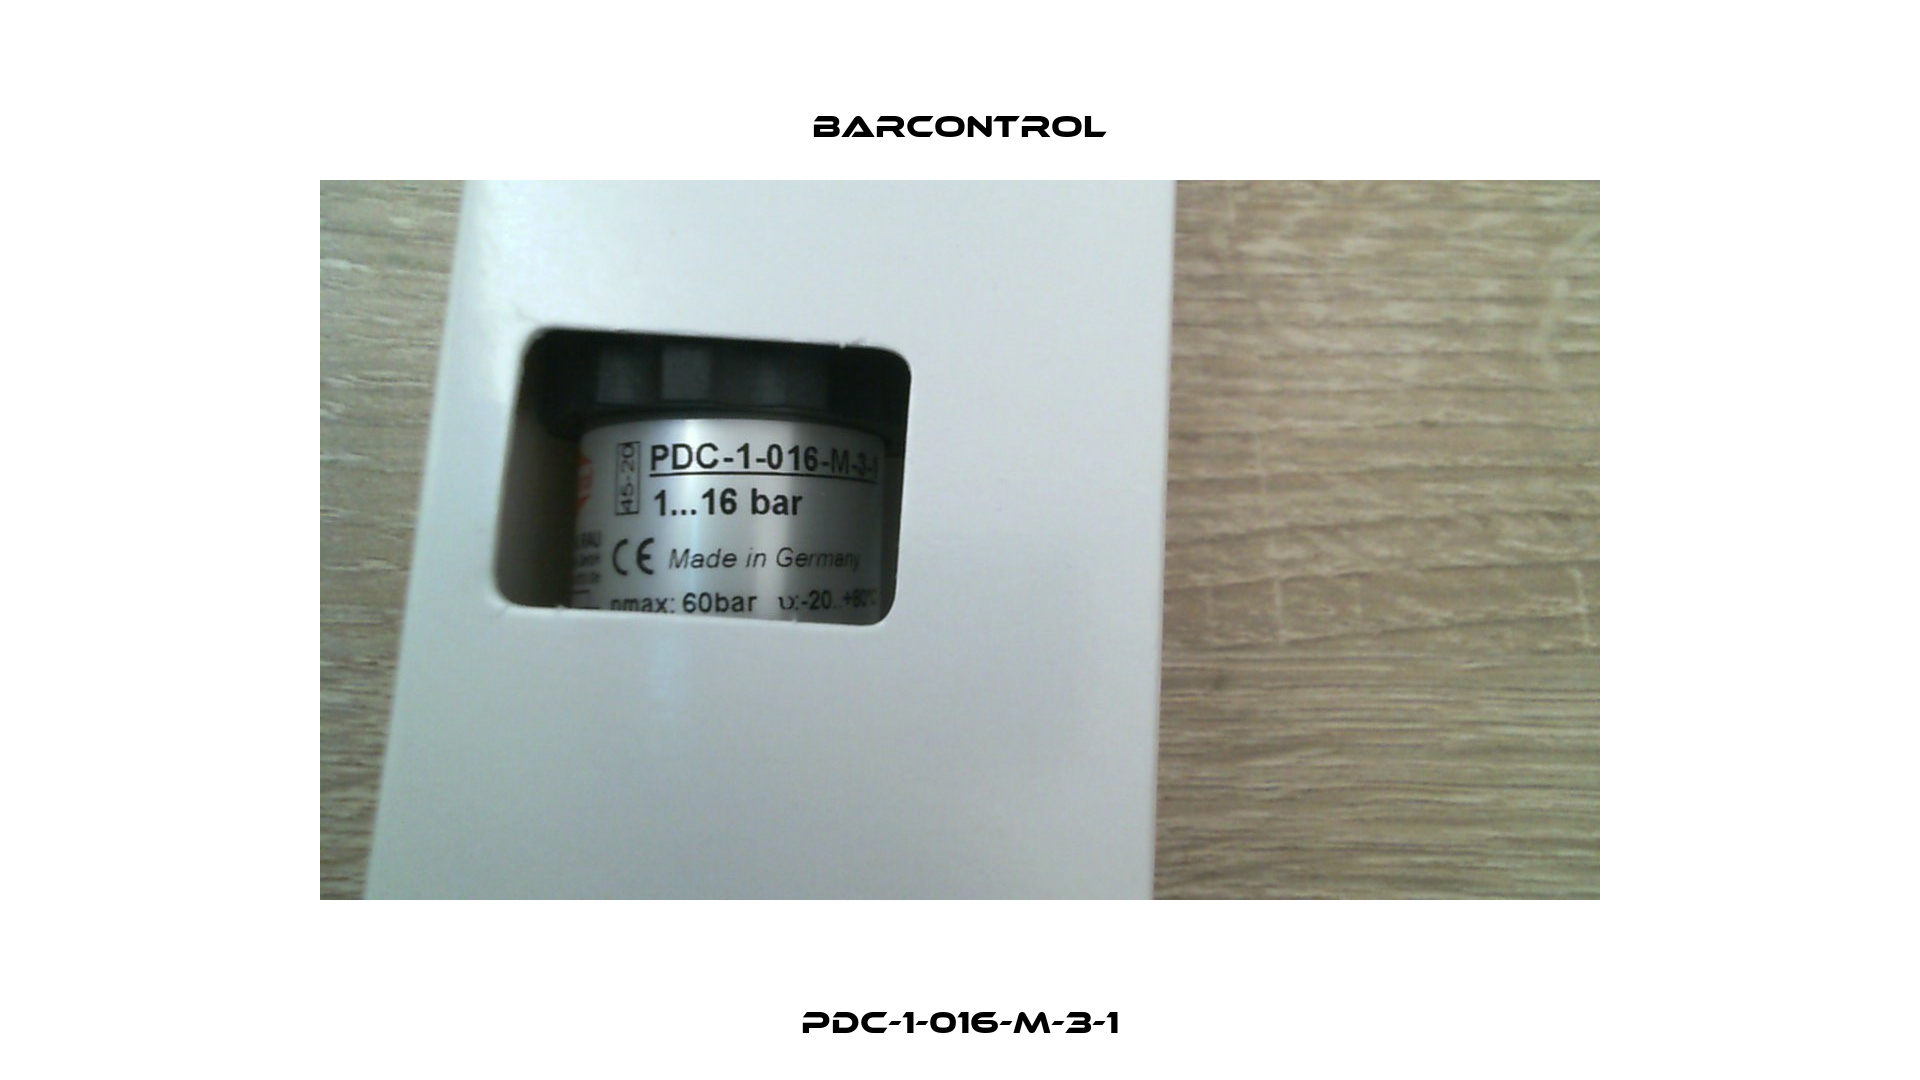 PDC-1-016-M-3-1 Barcontrol